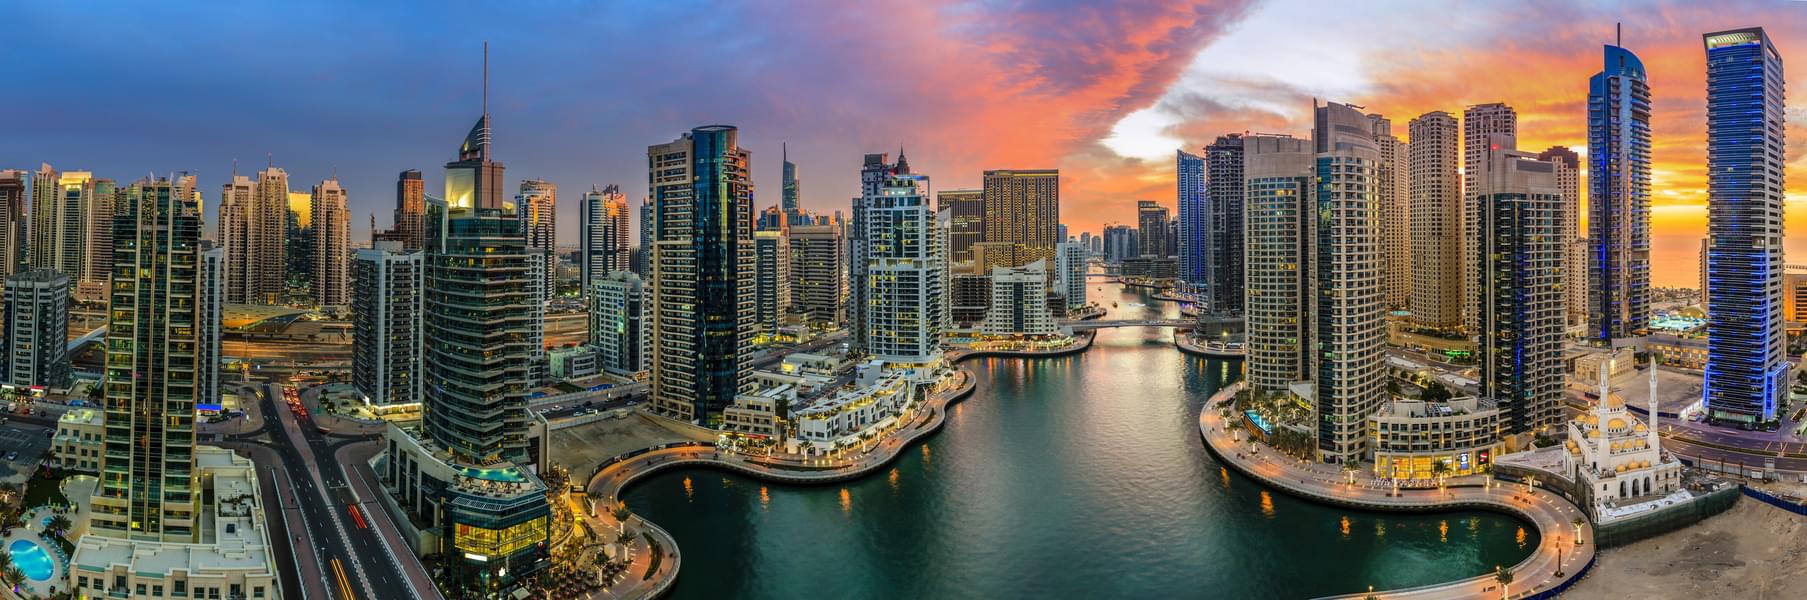 How to Reach Dubai Marina